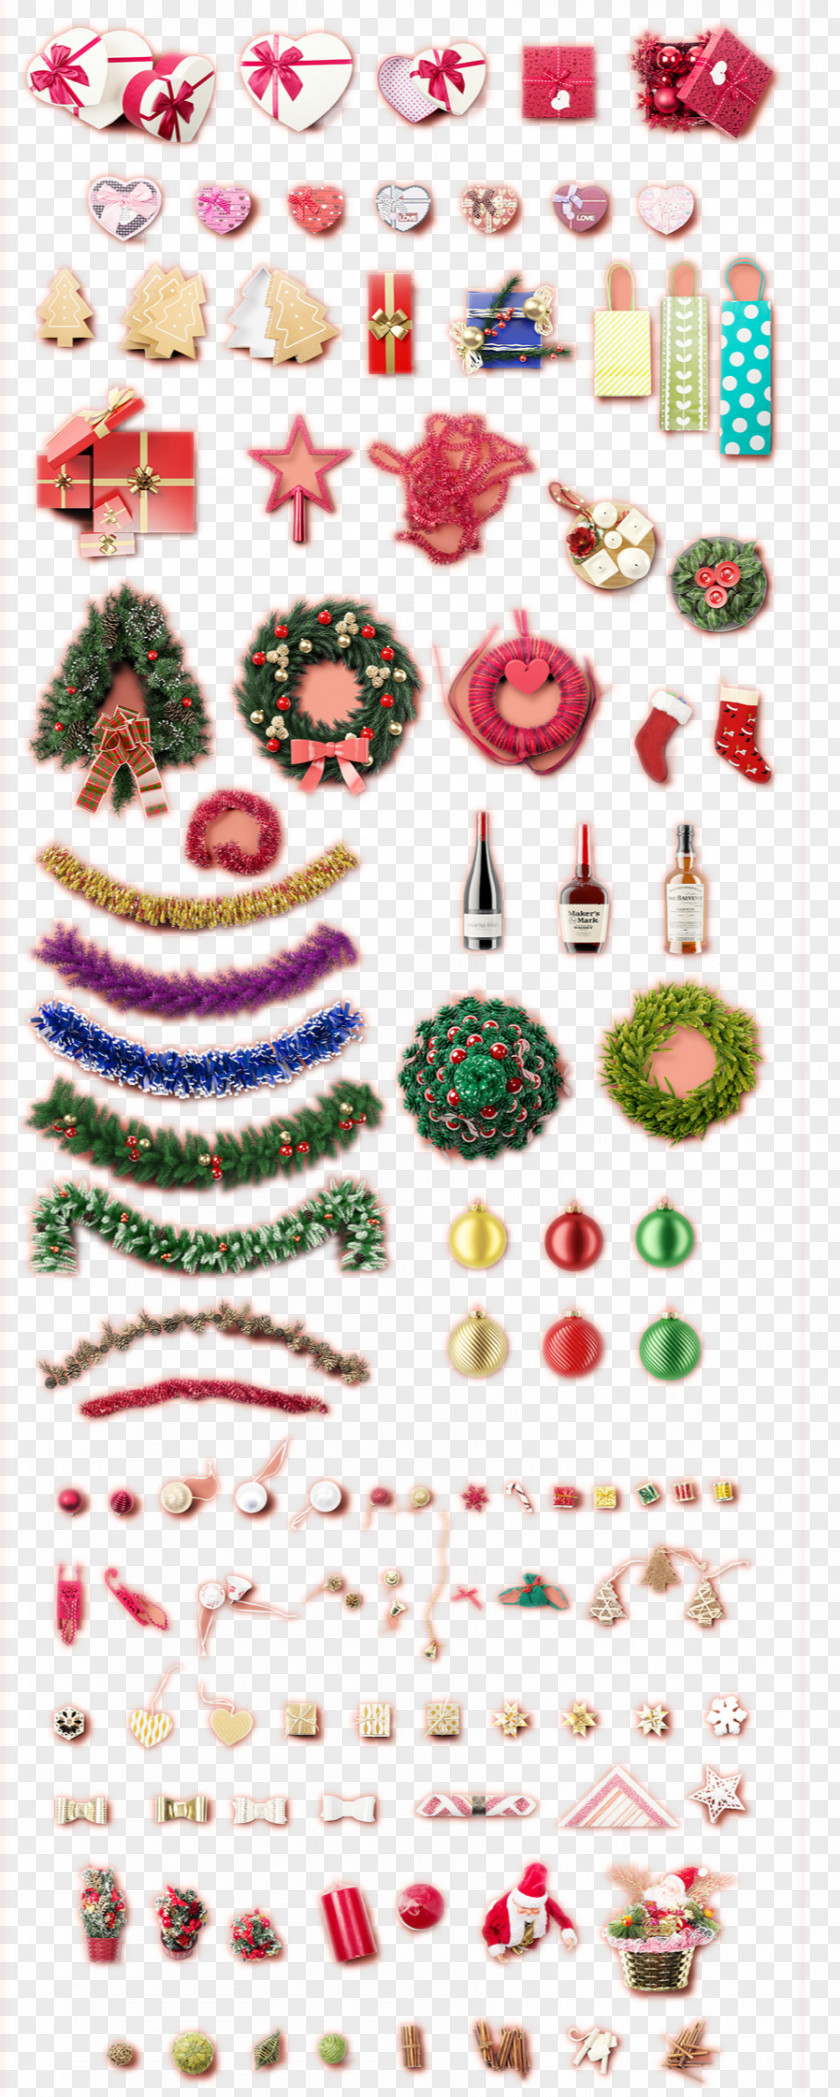 Christmas Decorations Gift Stocking Mockup PNG